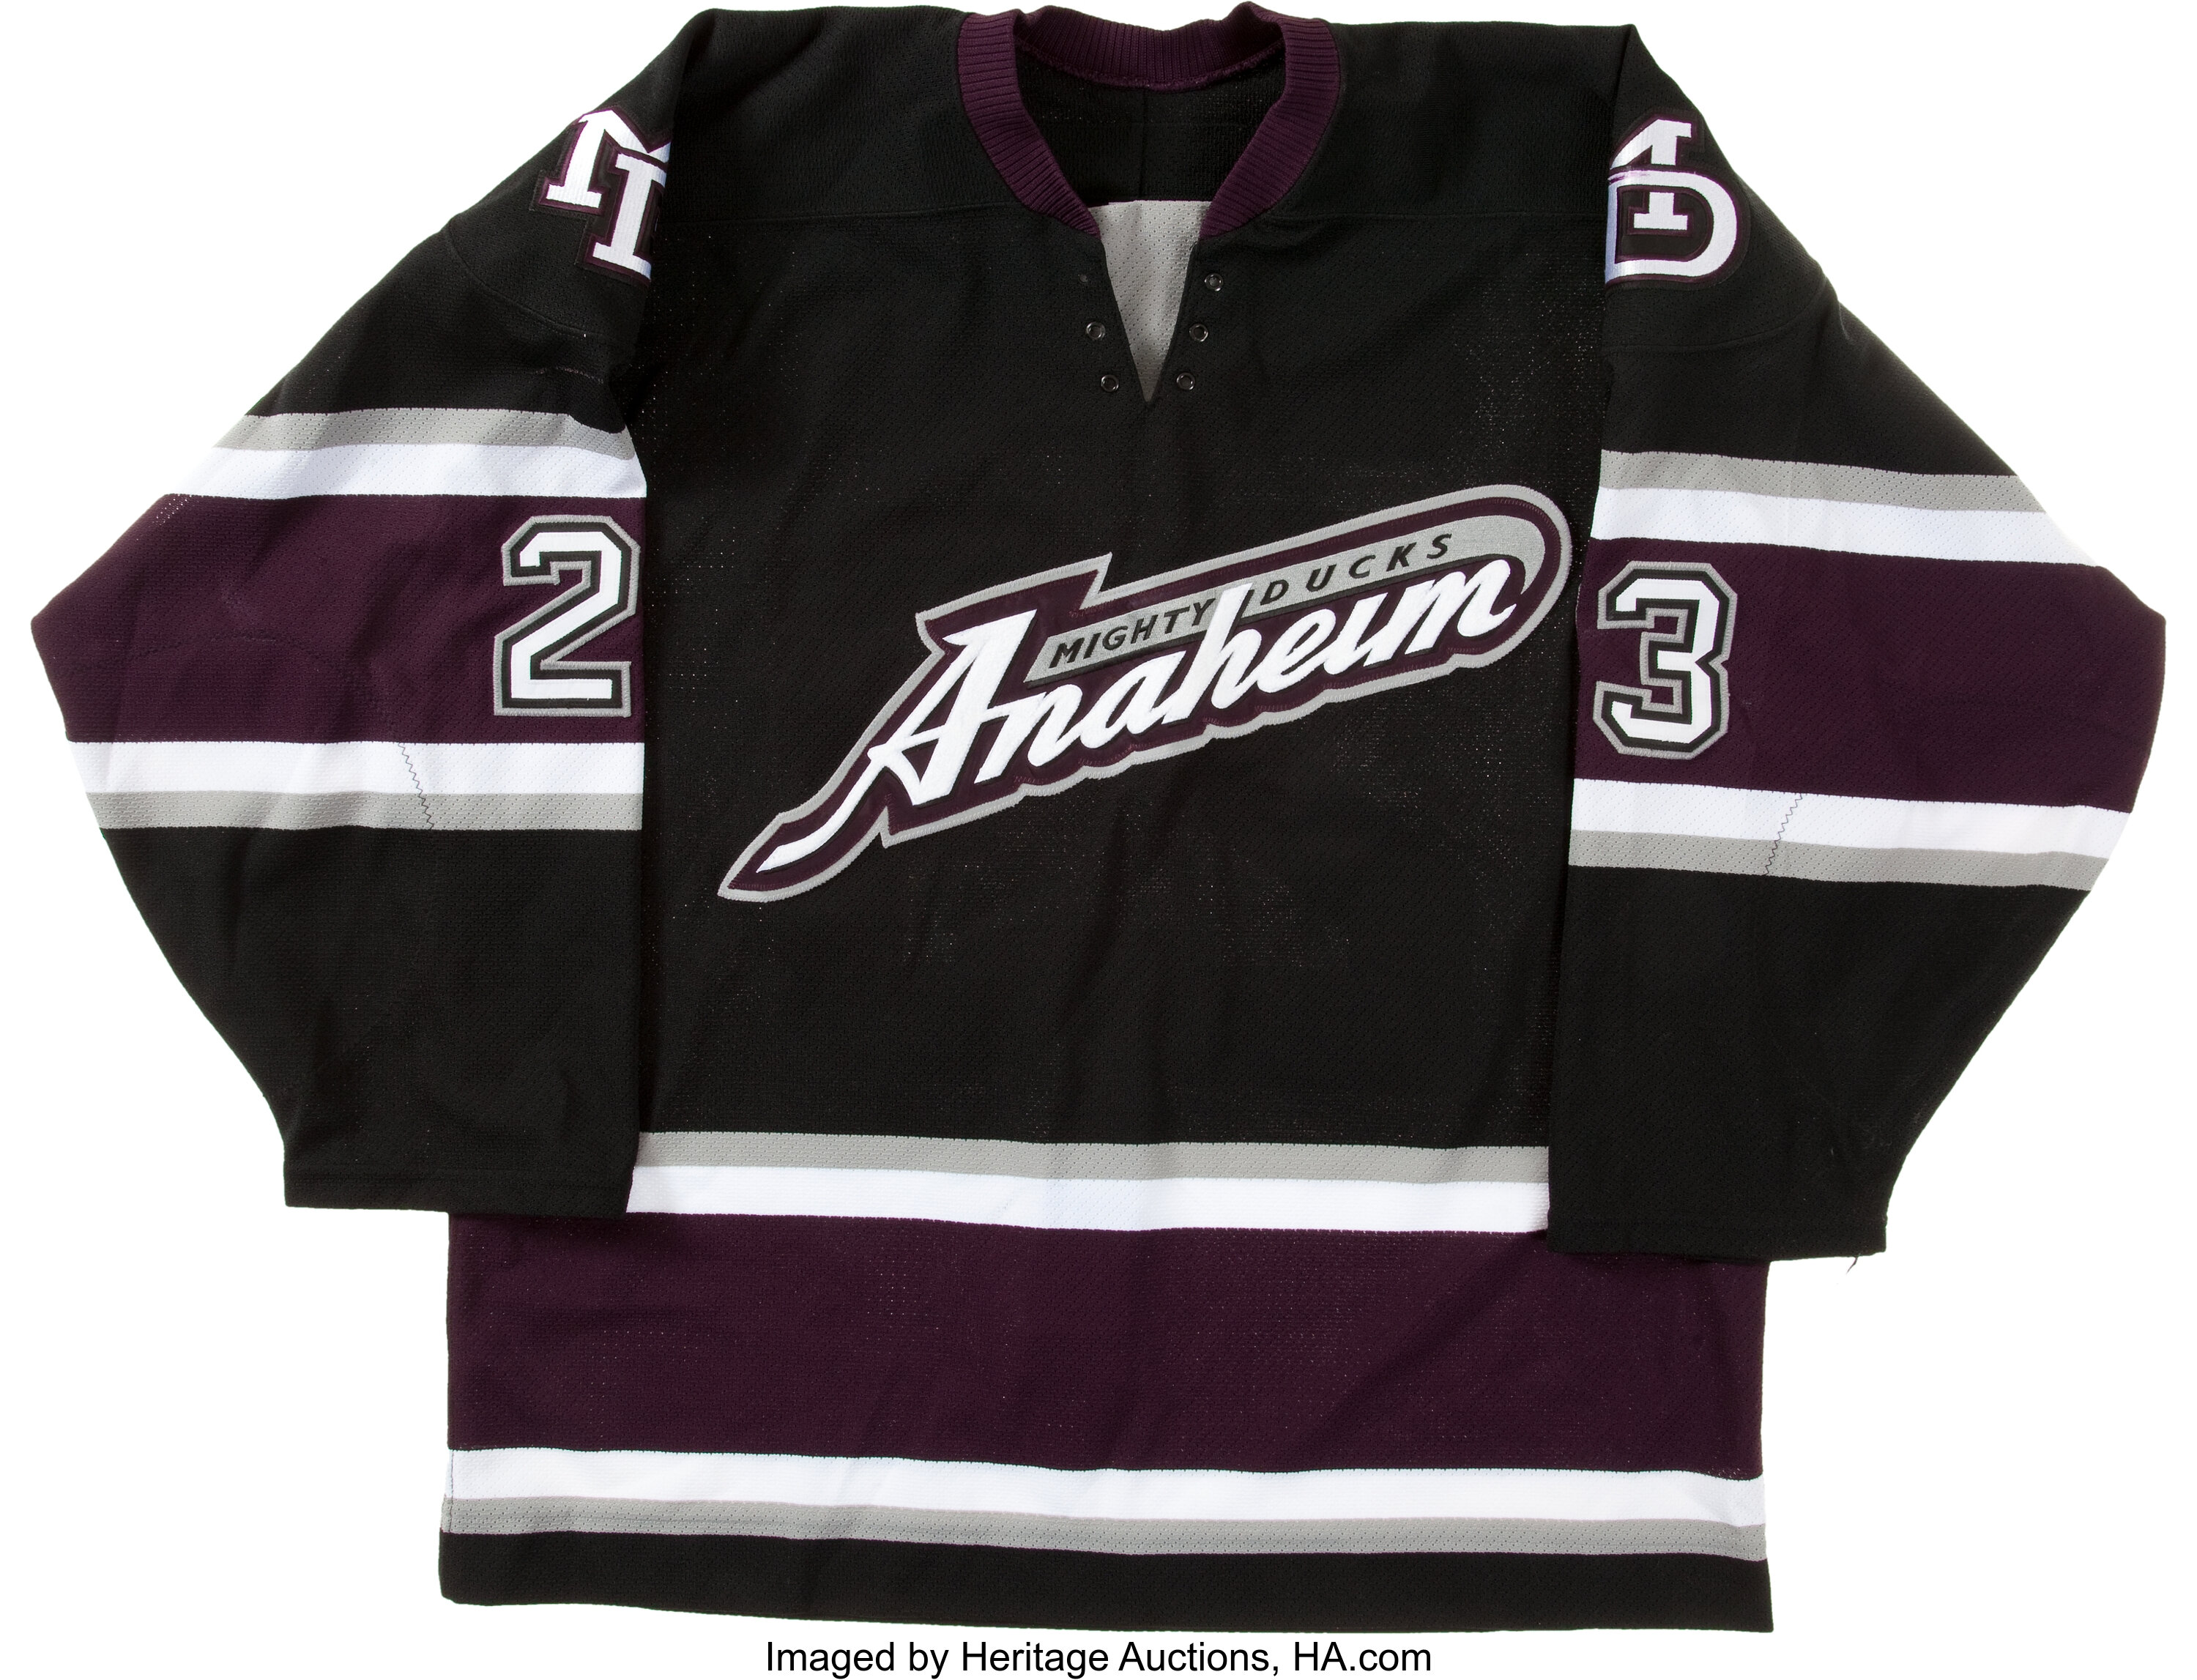 Anaheim Ducks Hockey Jerseys - collectibles - by owner - sale